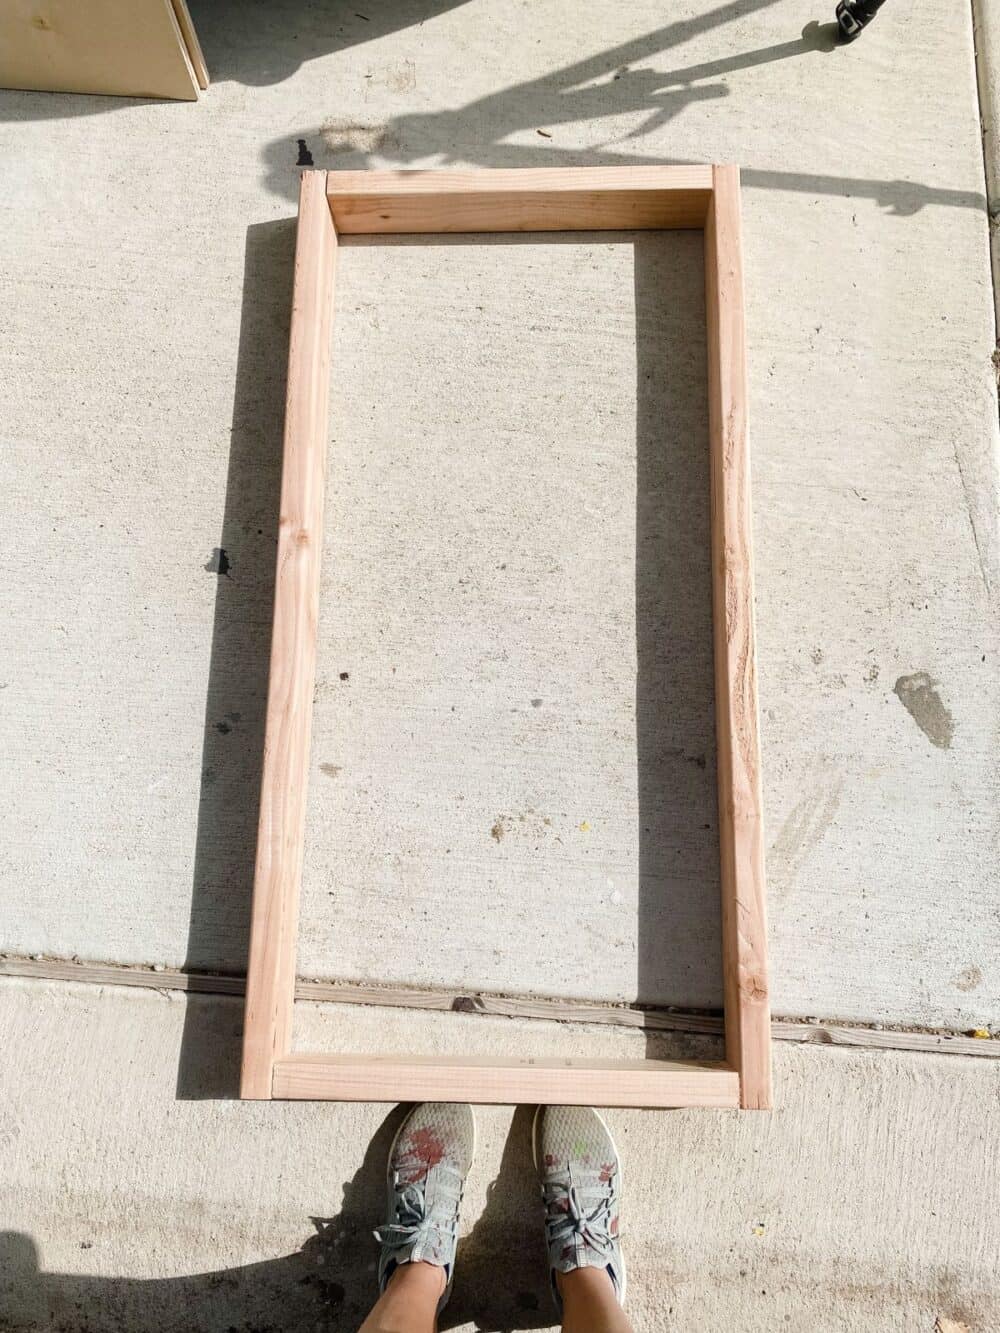 Base for building a cornhole board